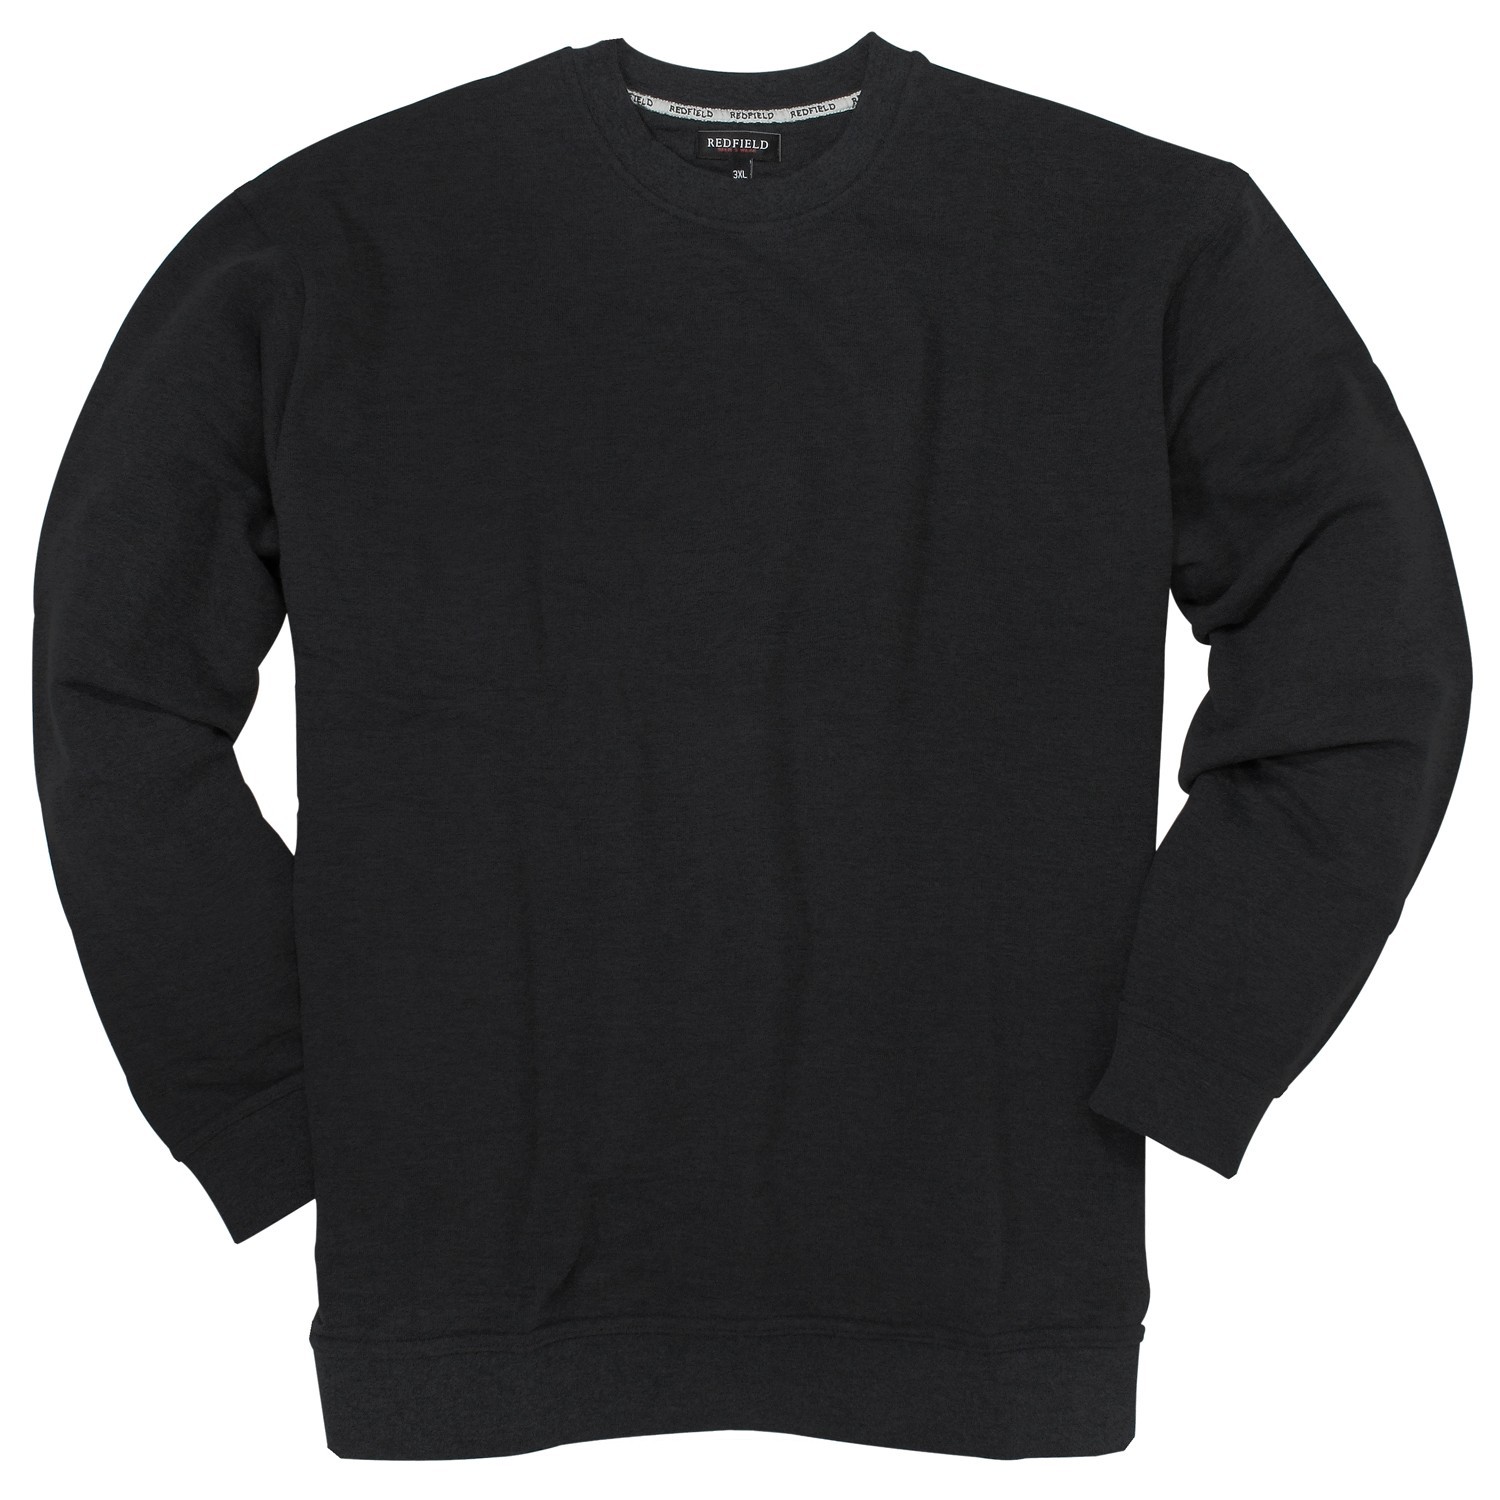 Black crew neck sweatshirt by Redfield in plus sizes up to 10XL